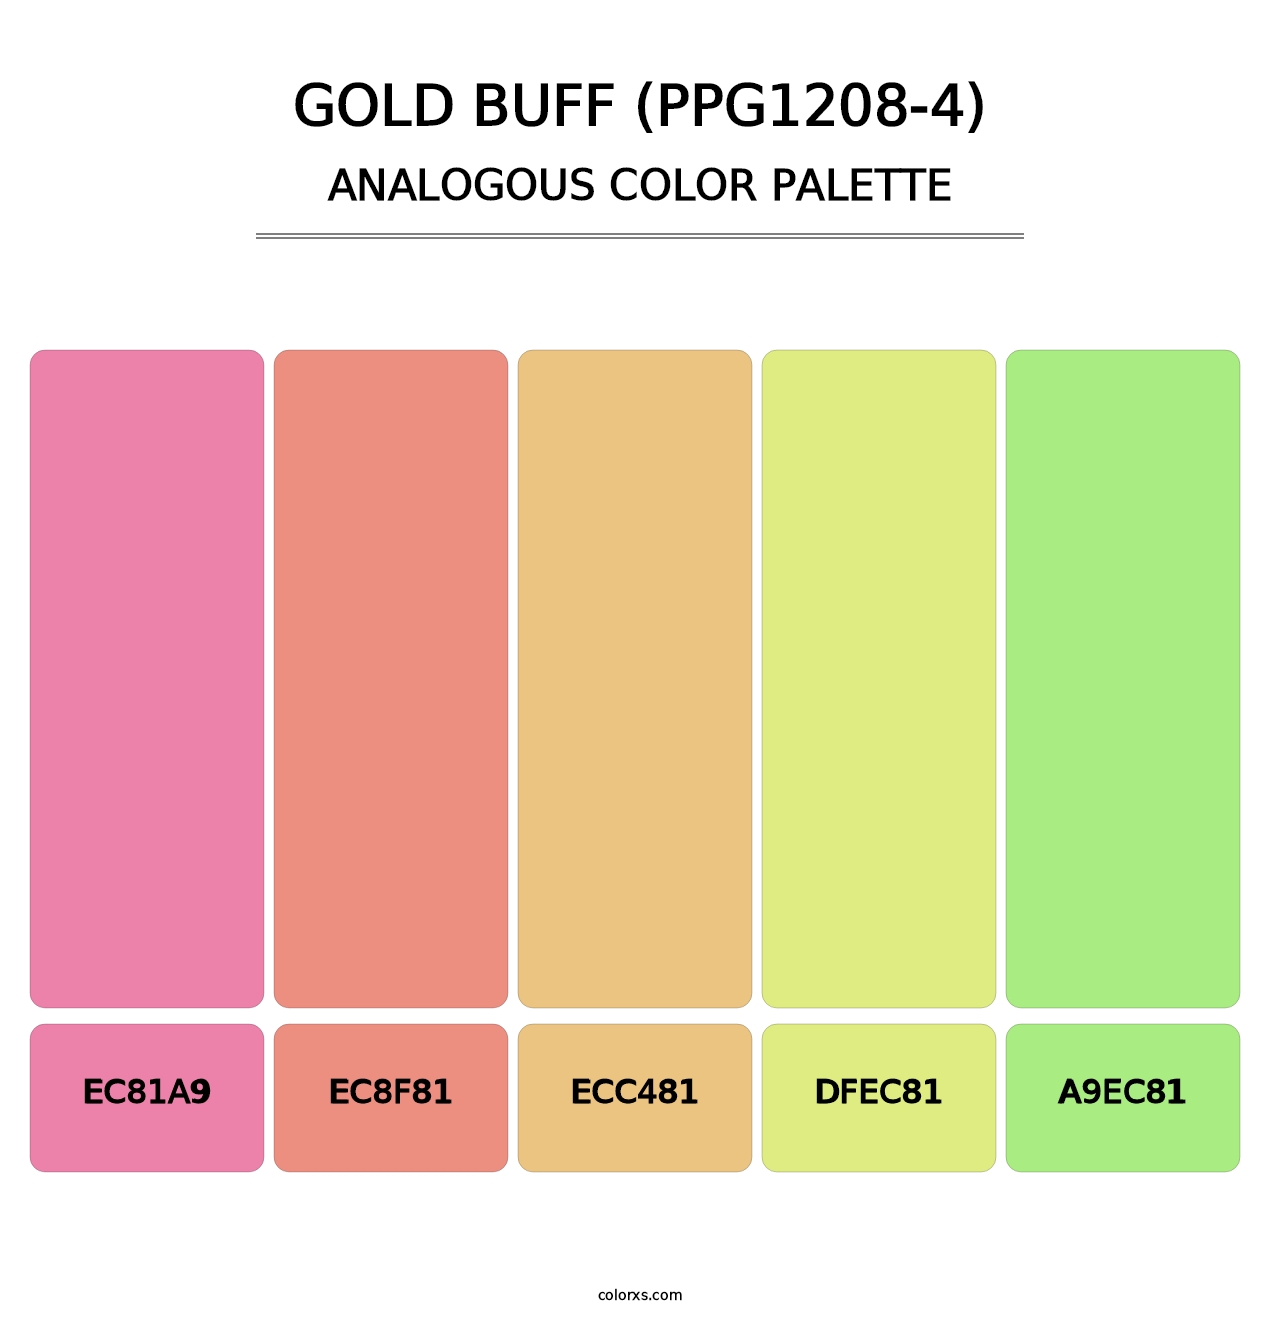 Gold Buff (PPG1208-4) - Analogous Color Palette